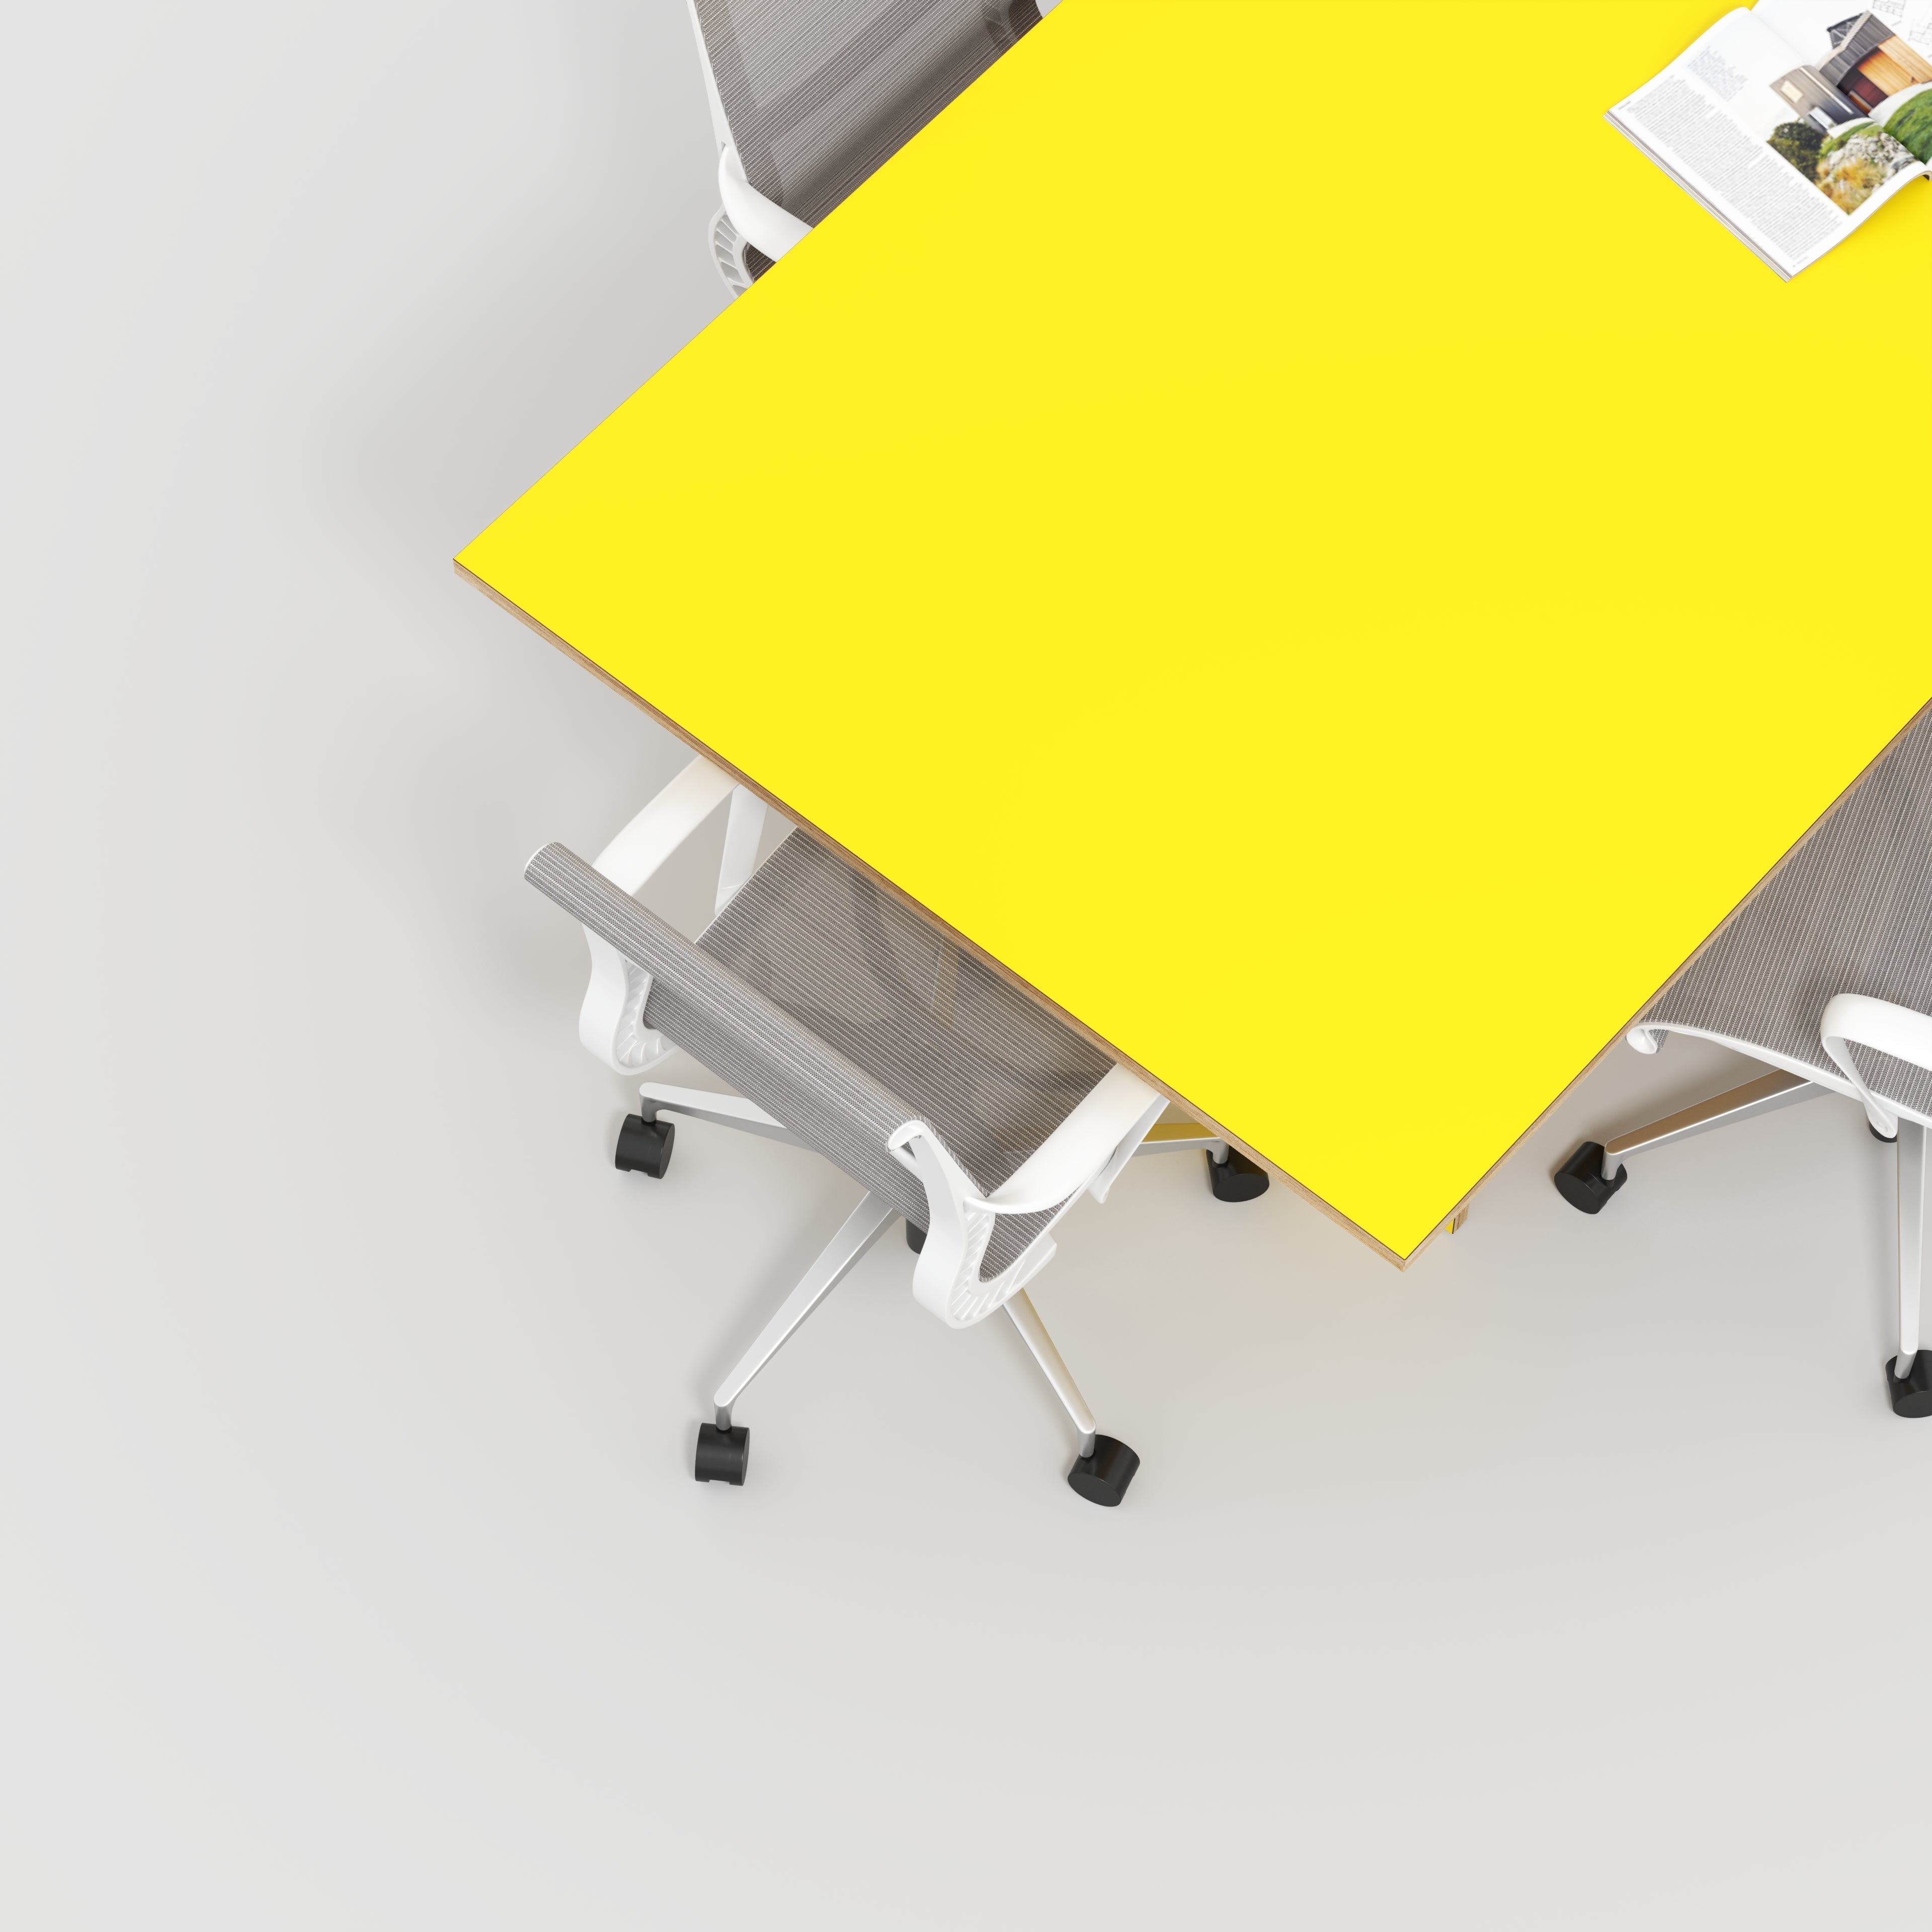 Platform Table - Formica Chrome Yellow - 5600(w) x 1000(d) x 750(h)